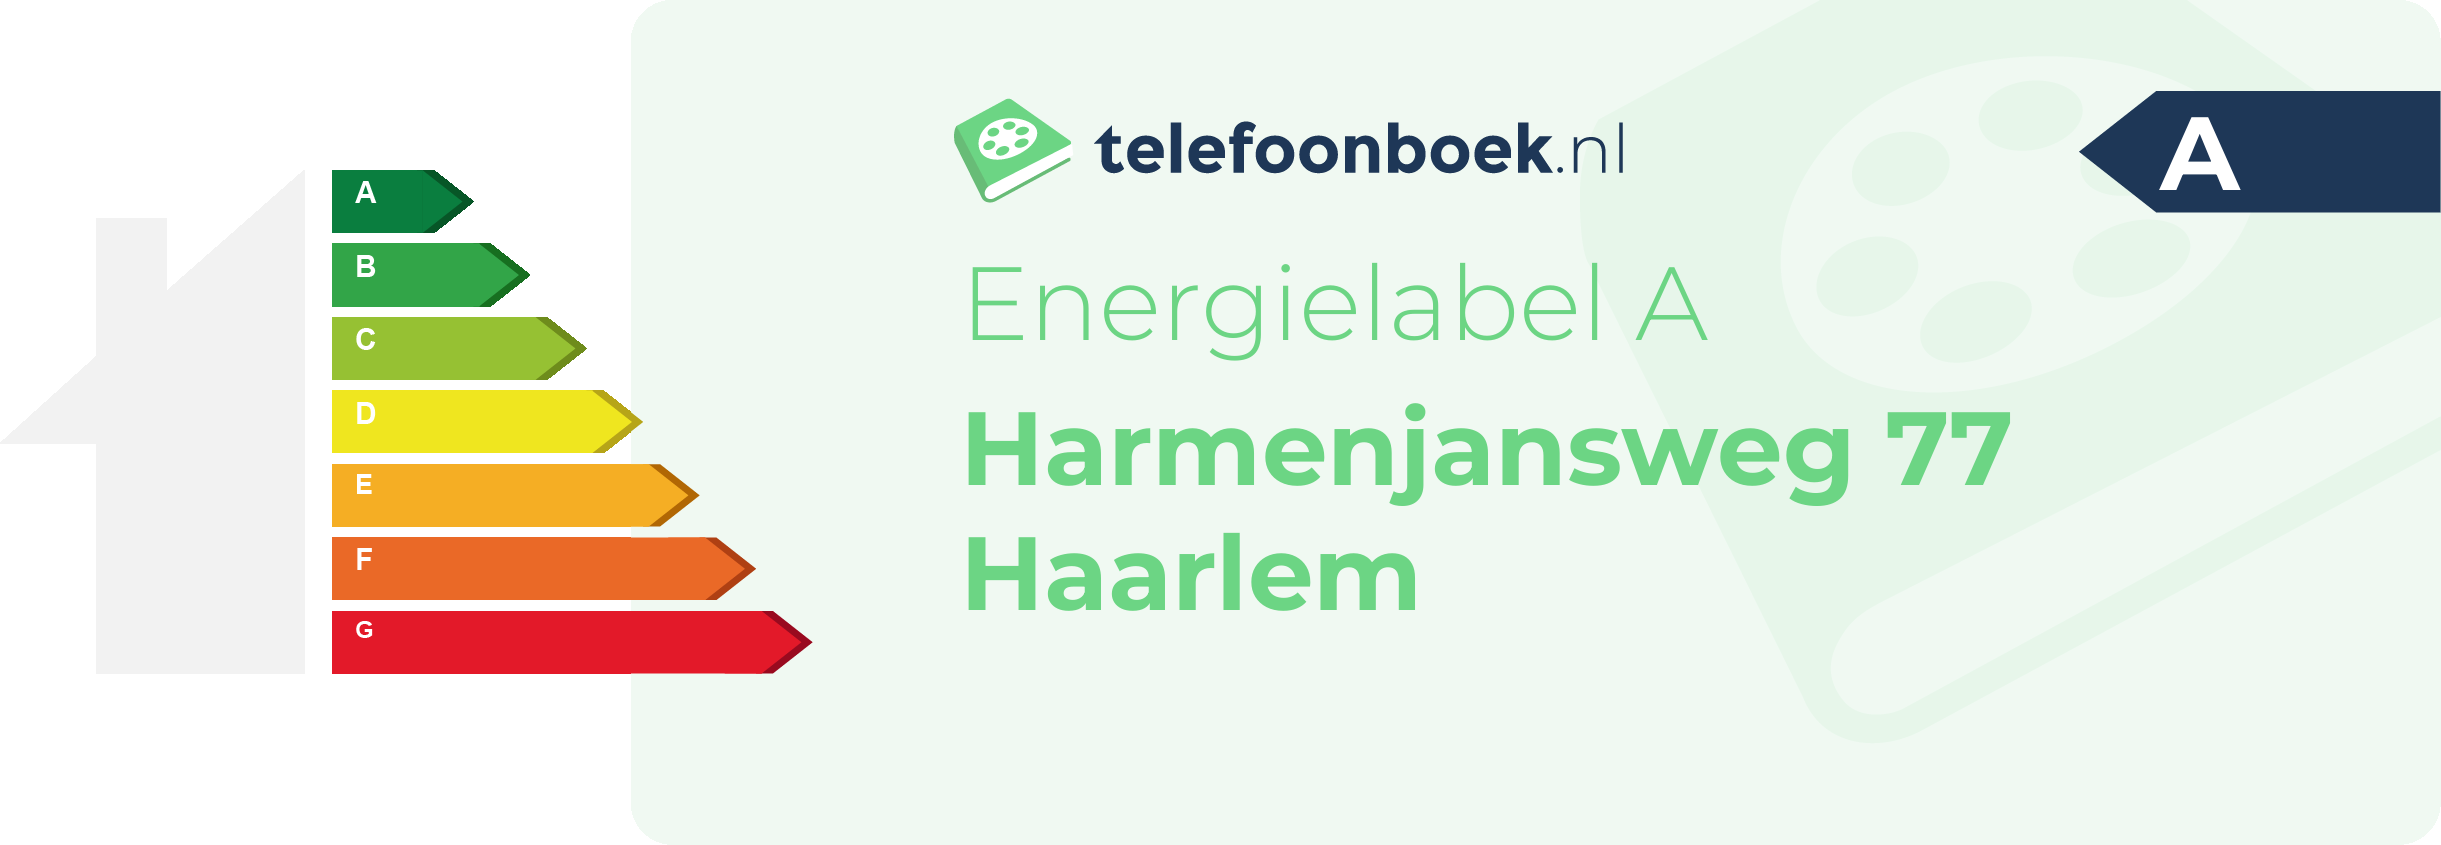 Energielabel Harmenjansweg 77 Haarlem